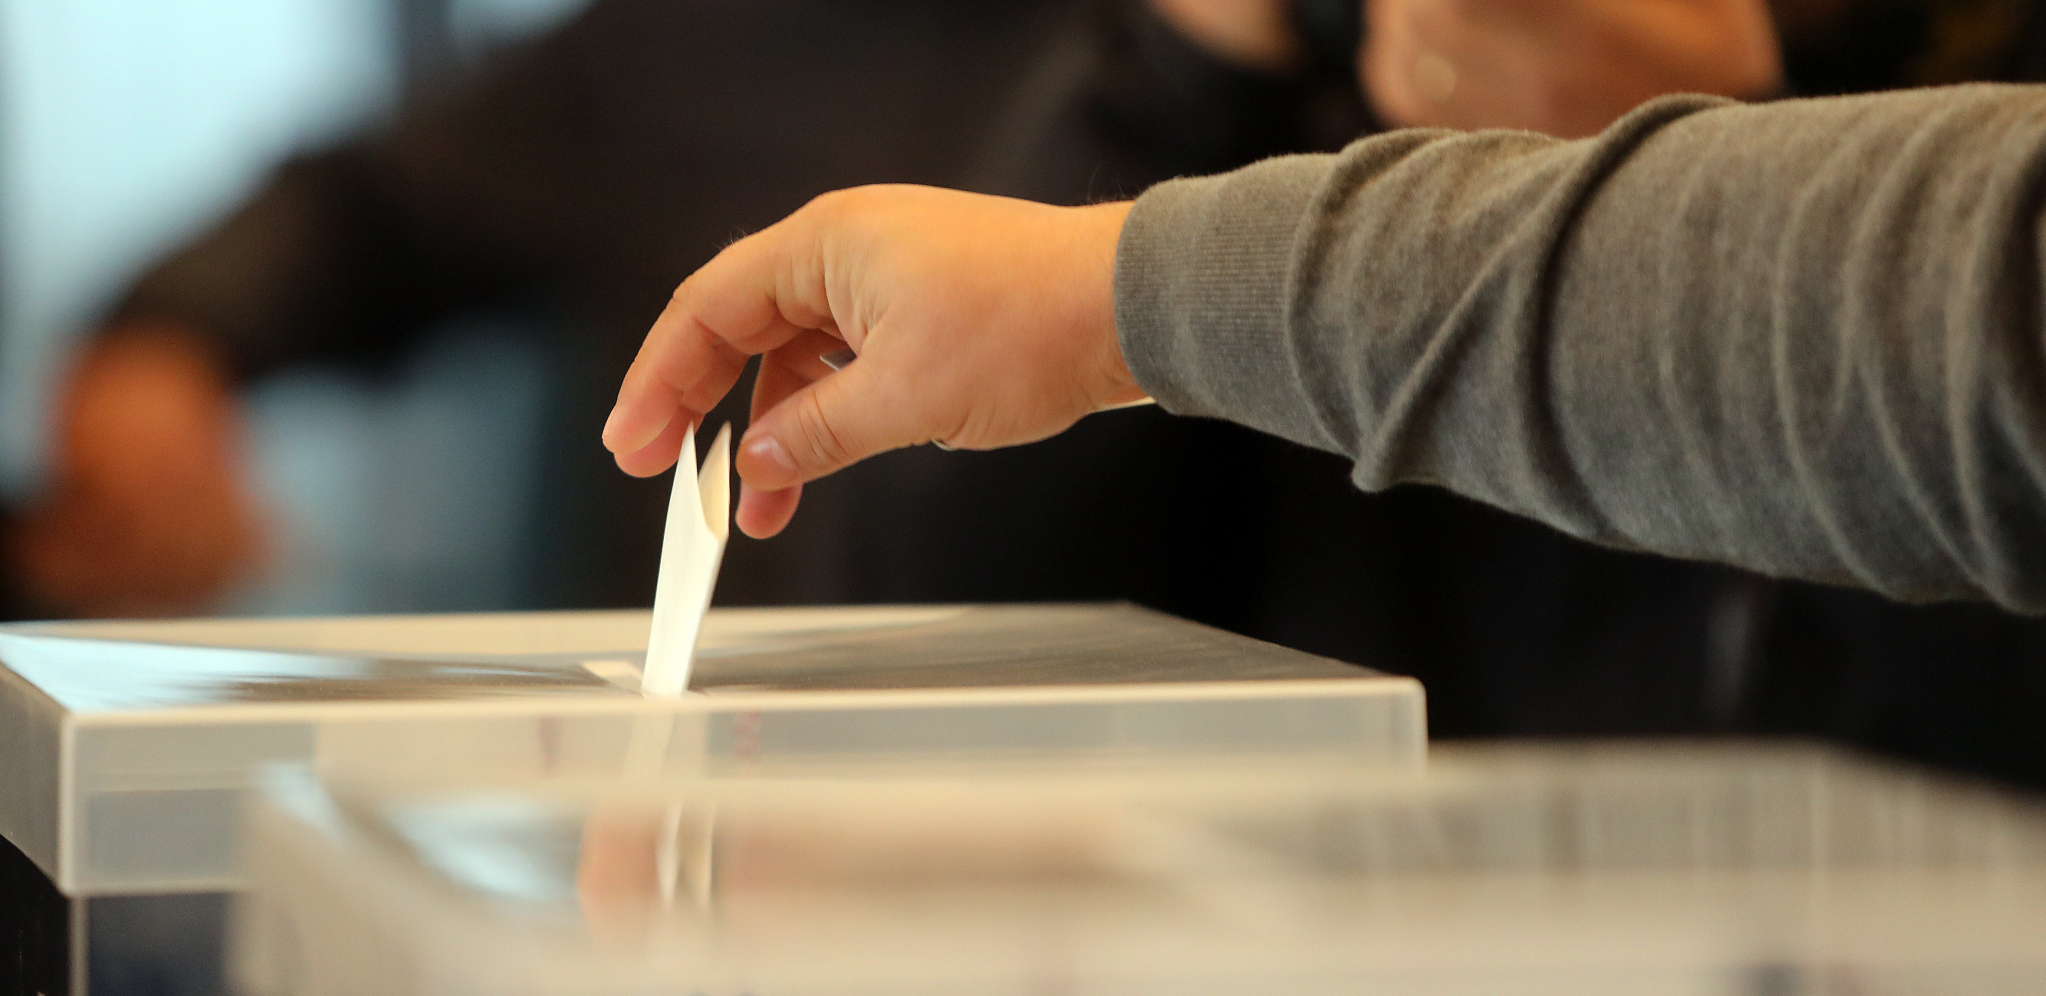 RIK DONEO ODLUKU: Ponovljeno glasanje na oko 30 biračkih mesta 30. decembra